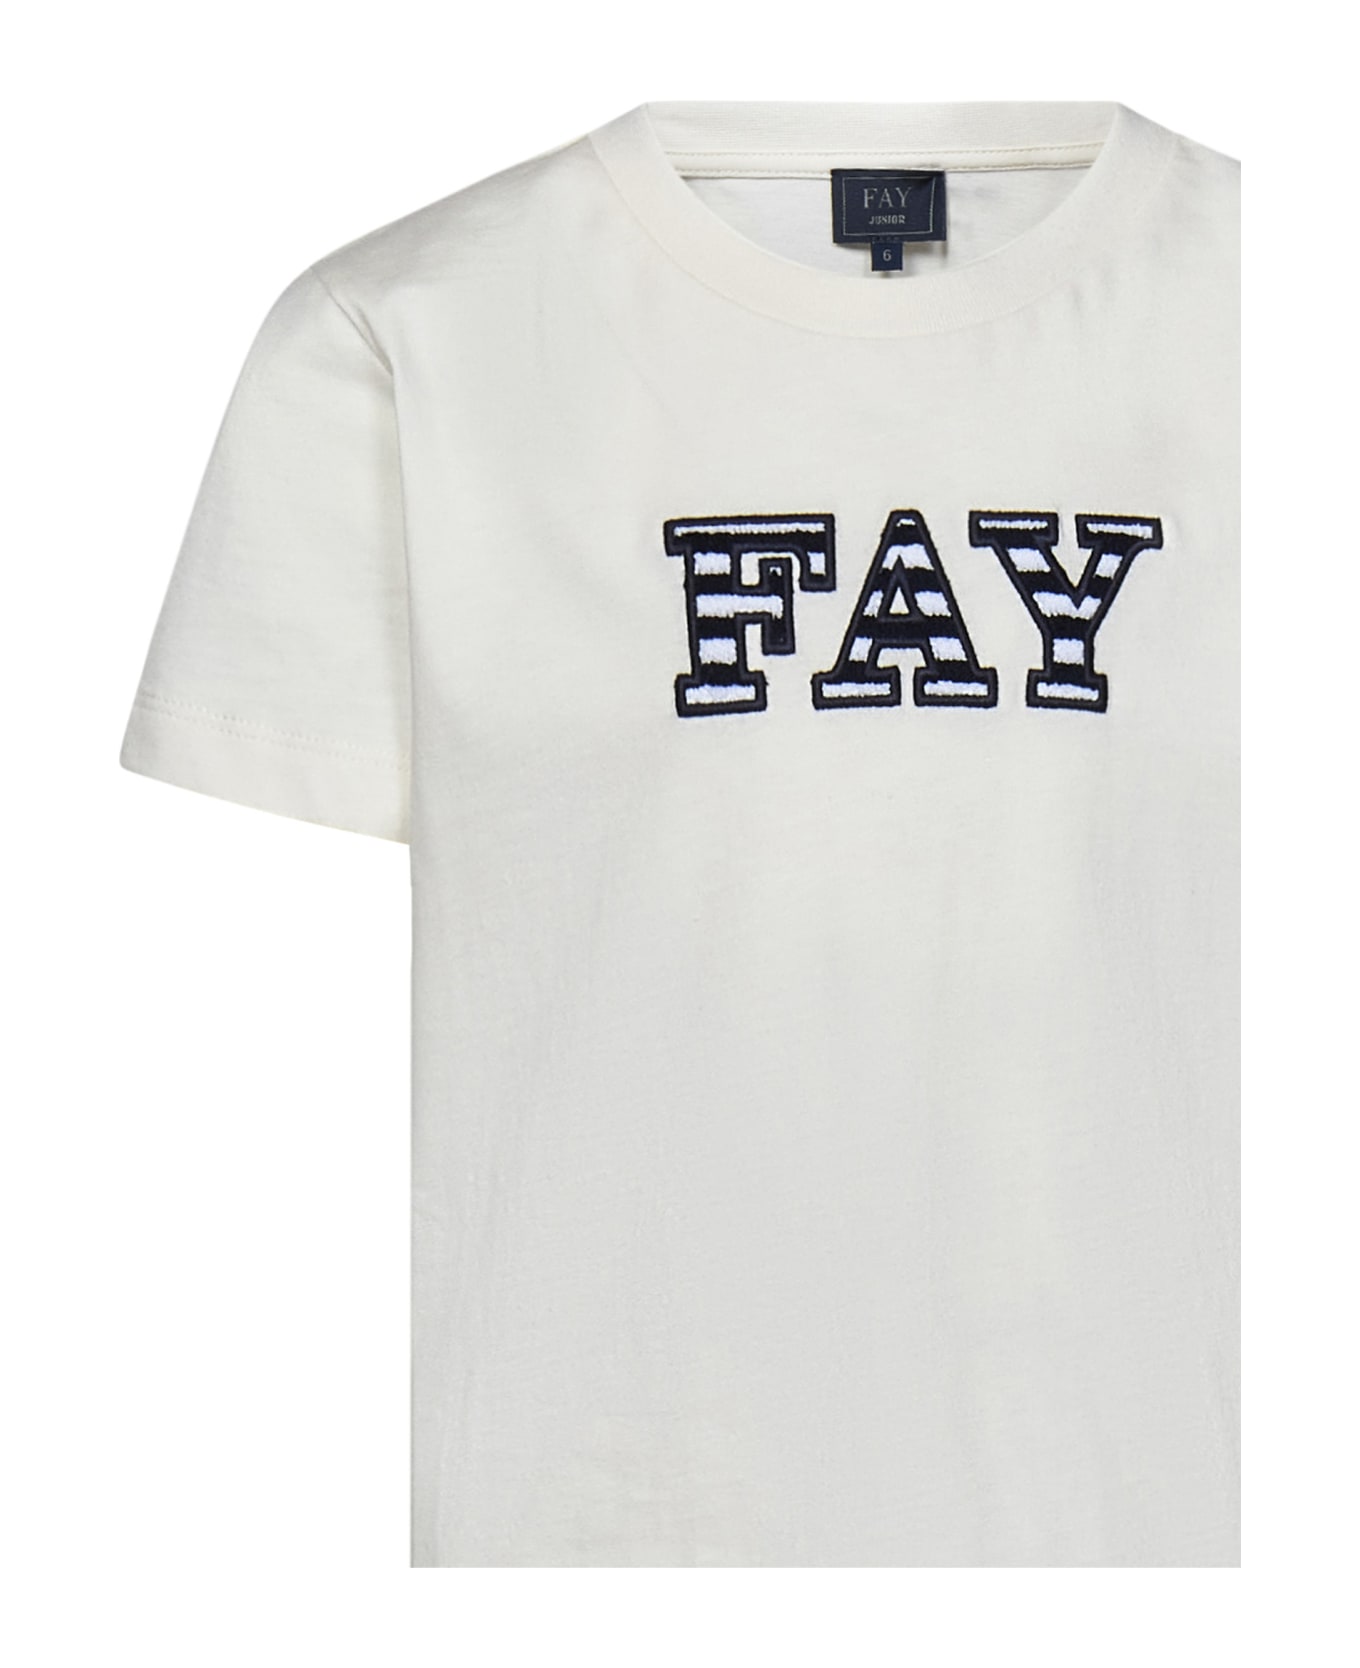 Fay T-shirt - White